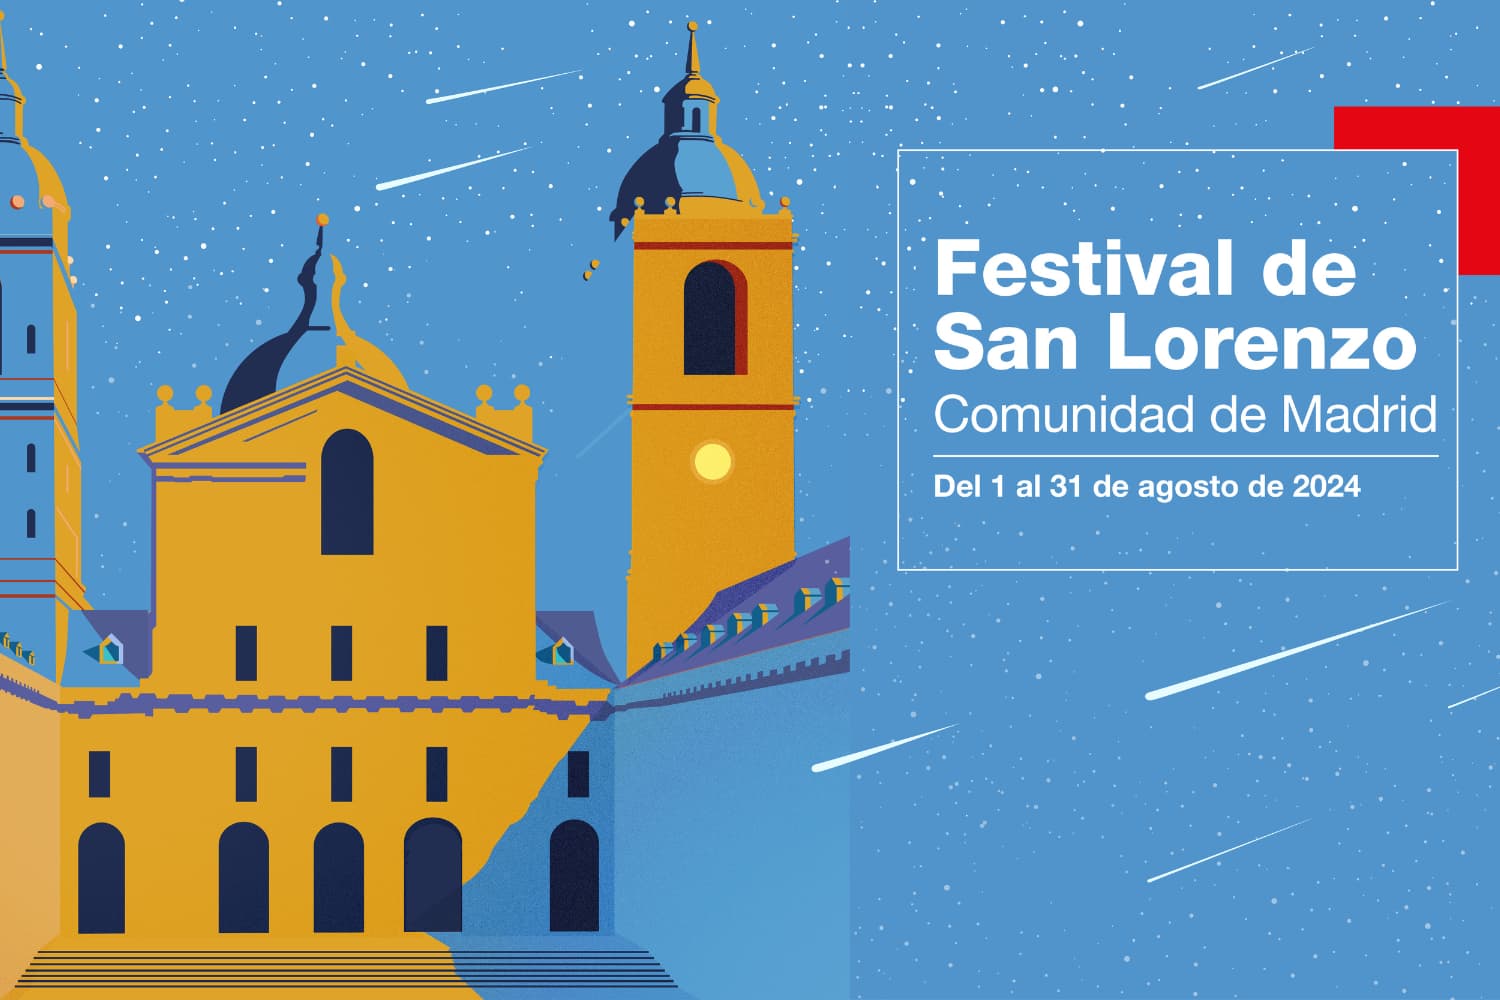 Festival of San Lorenzo 2024